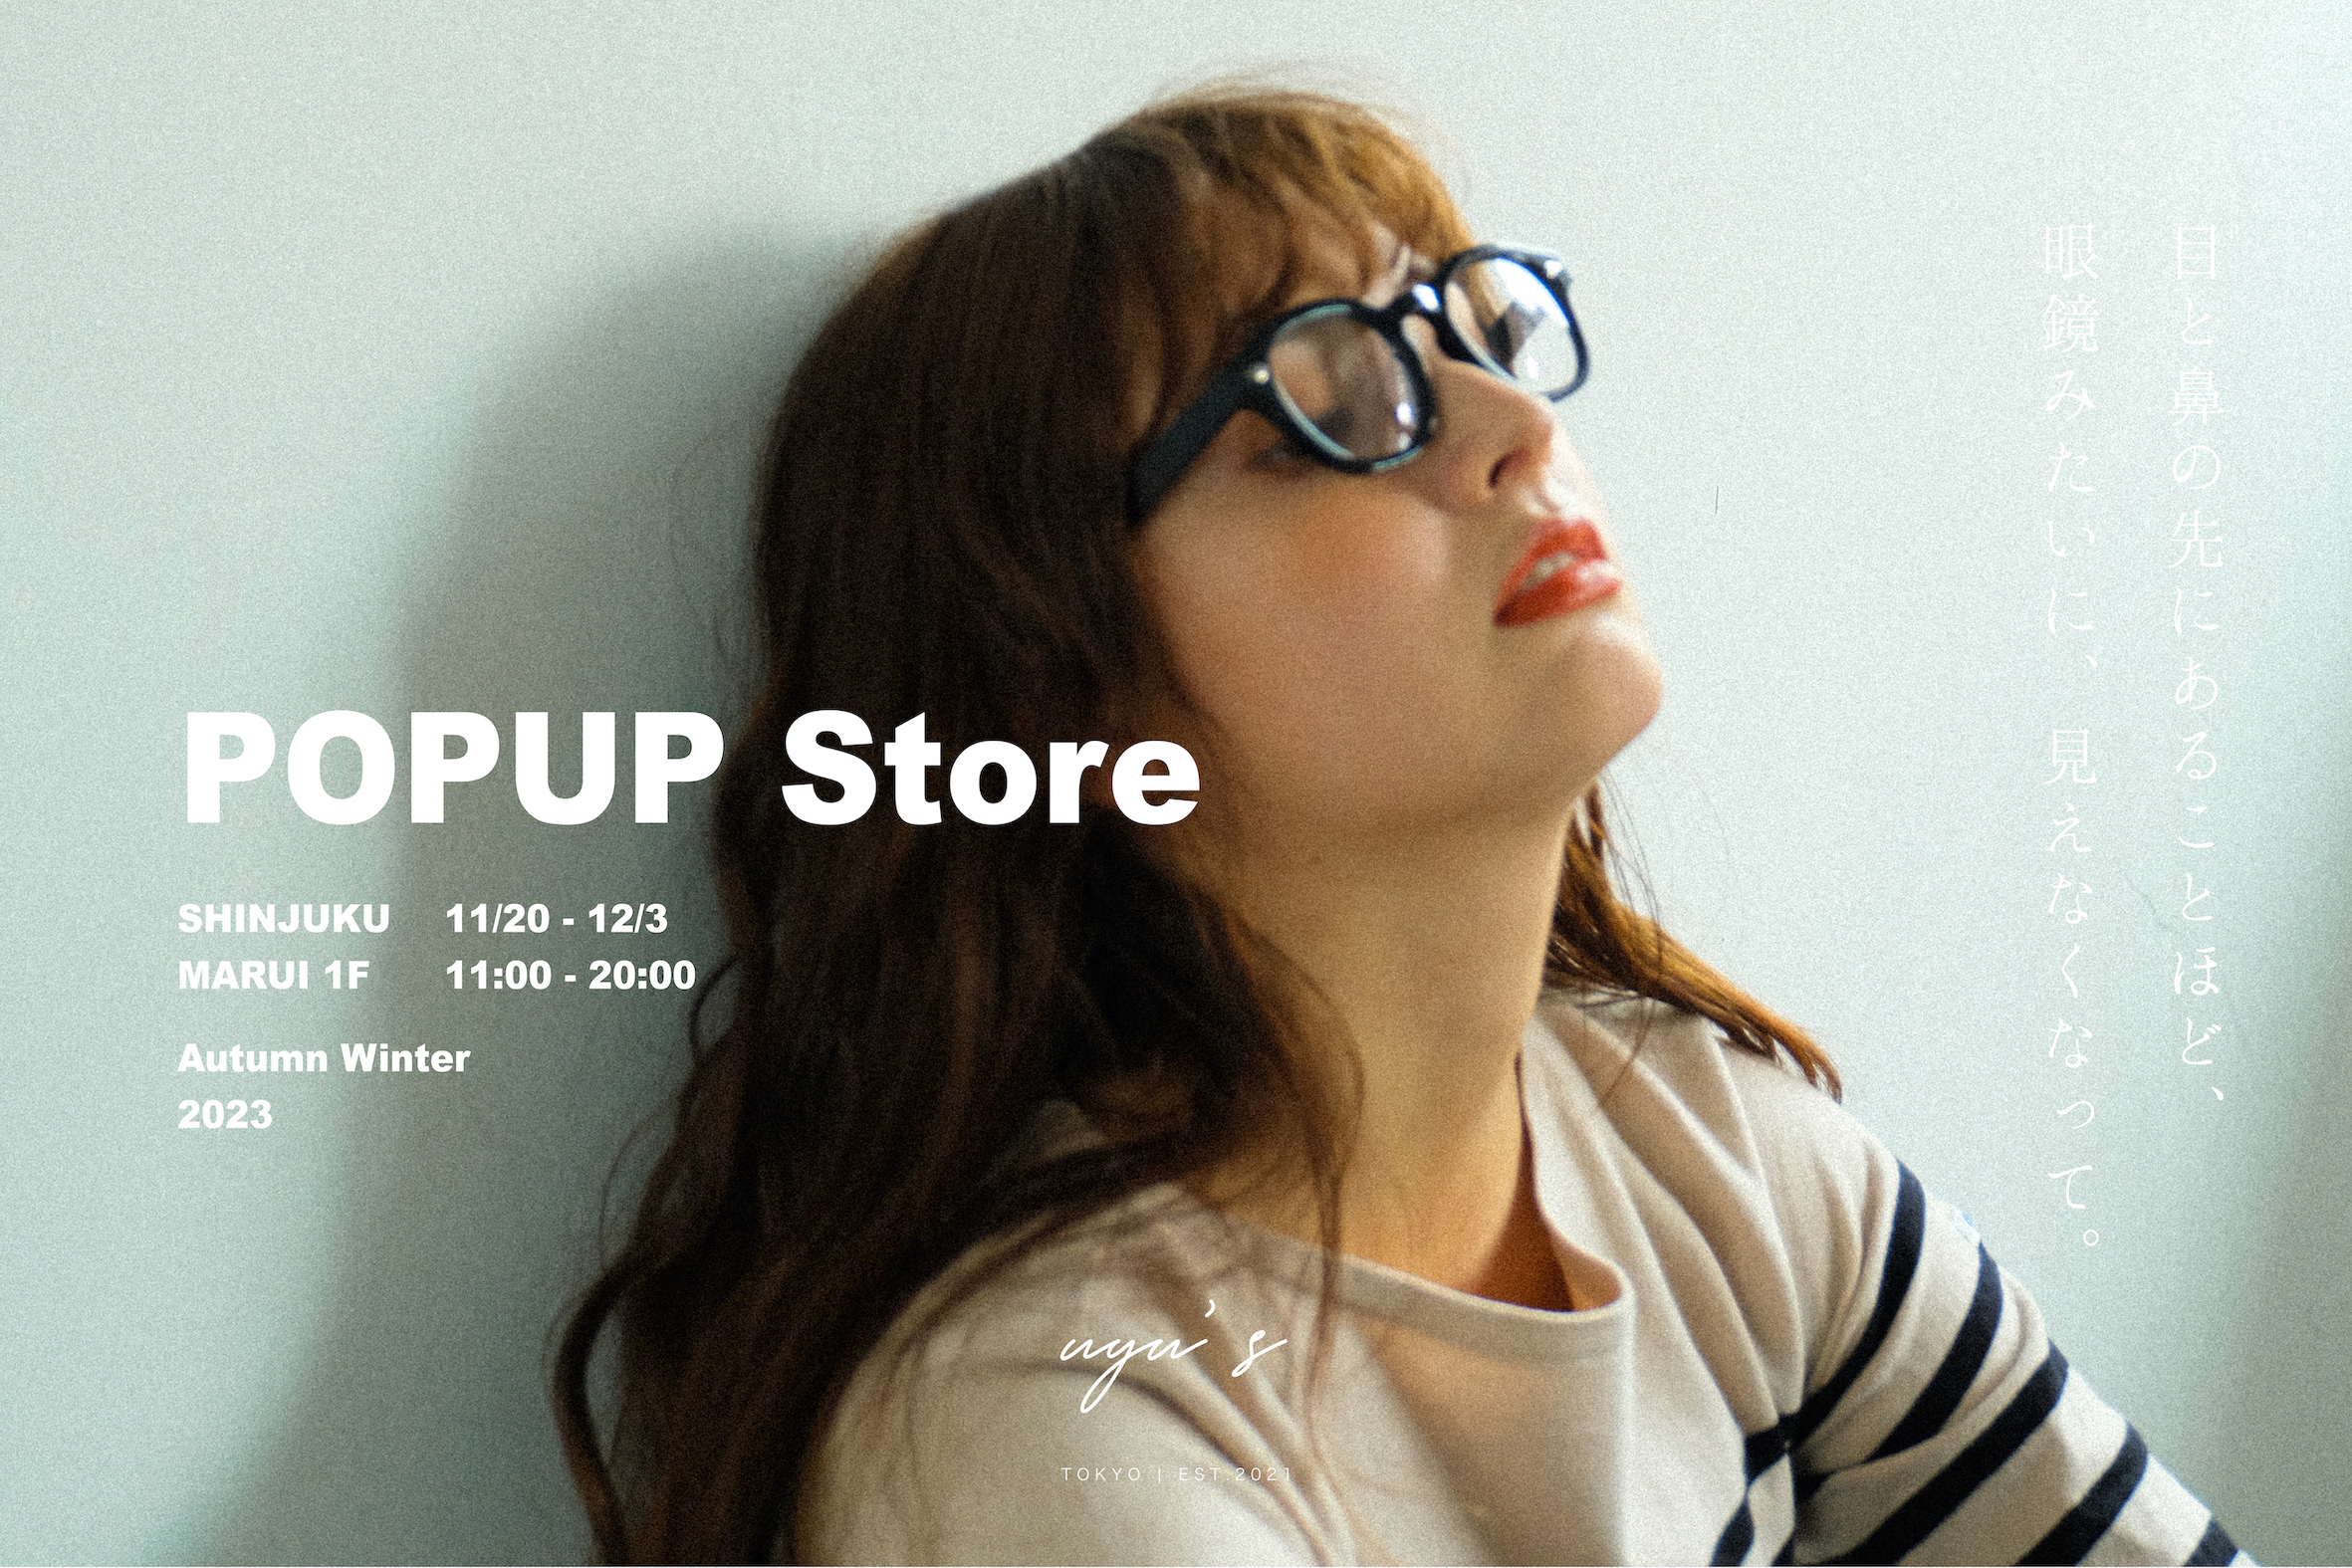 「POPUP Store SHINJUKU MARUI」開催のお知らせ